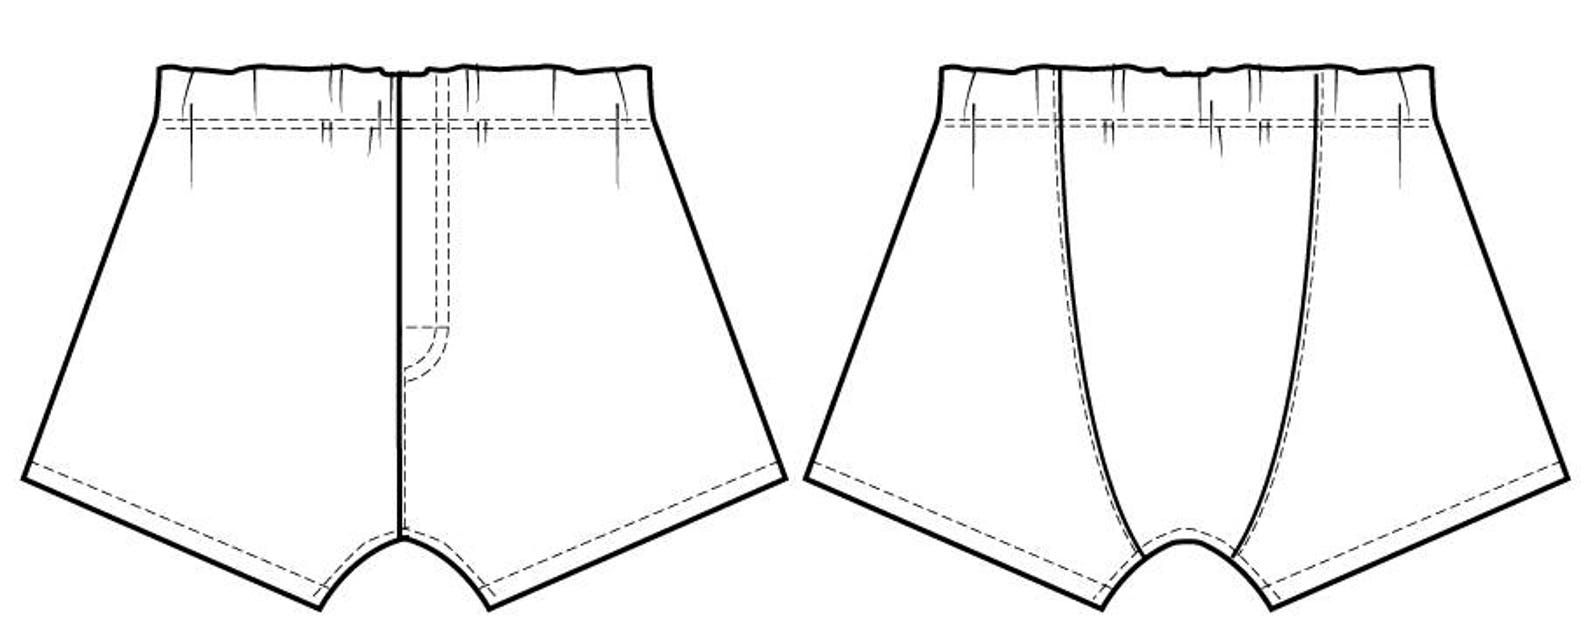 Boxer briefs for men sewing pattern pdf DIY clothing boxer | Etsy